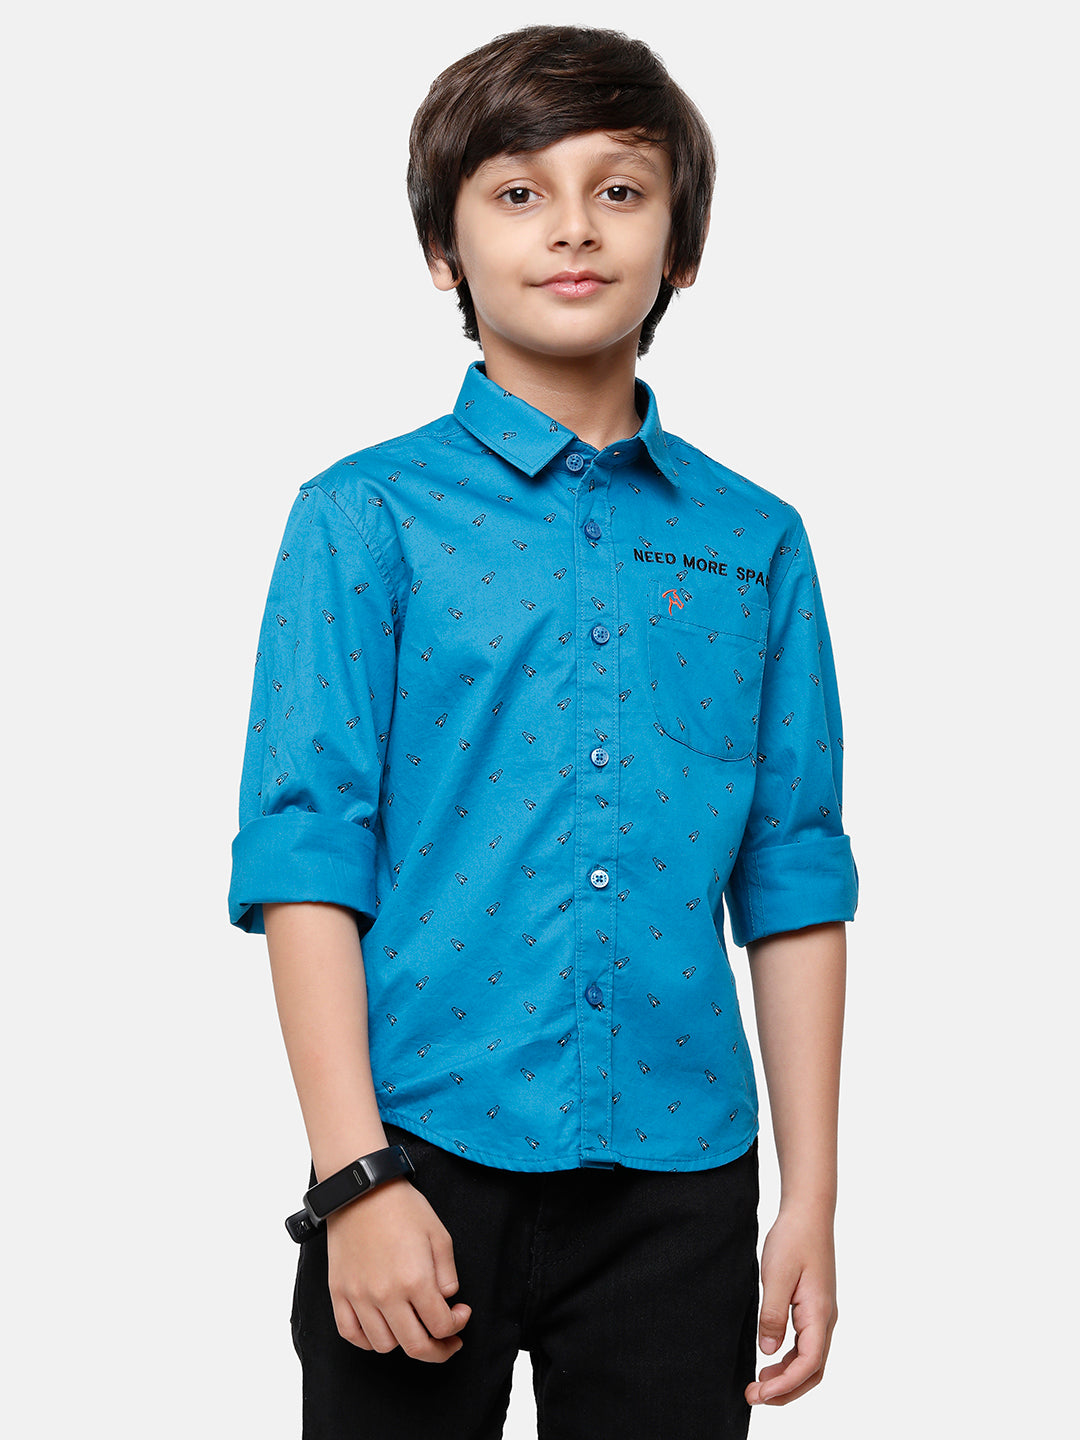 CP Boys Blue Printed Full Sleeve Slim Fit Shirt Shirts Classic Polo 